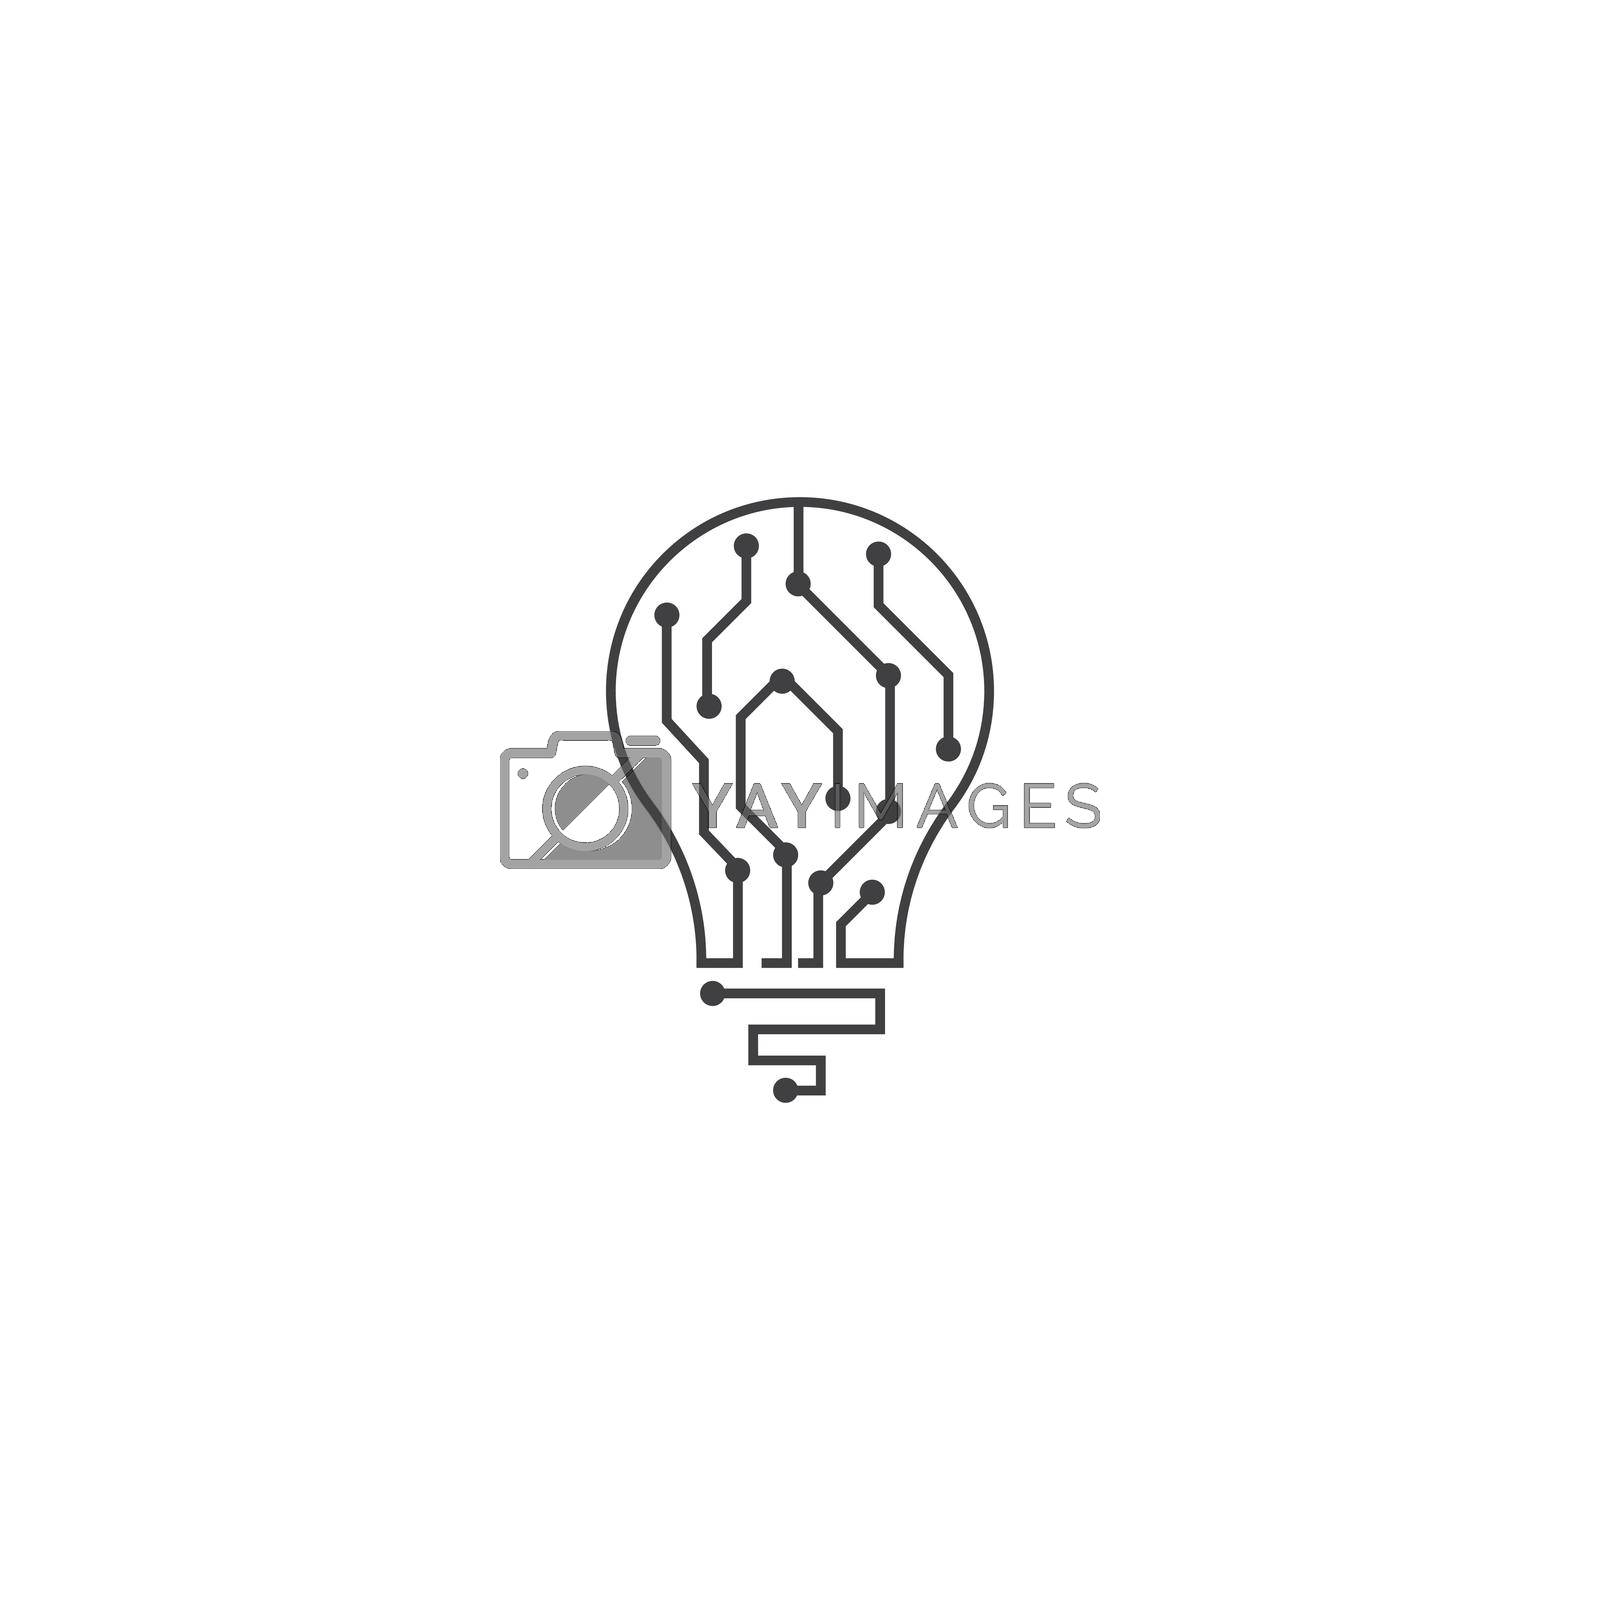 Bulb technology logo vector template